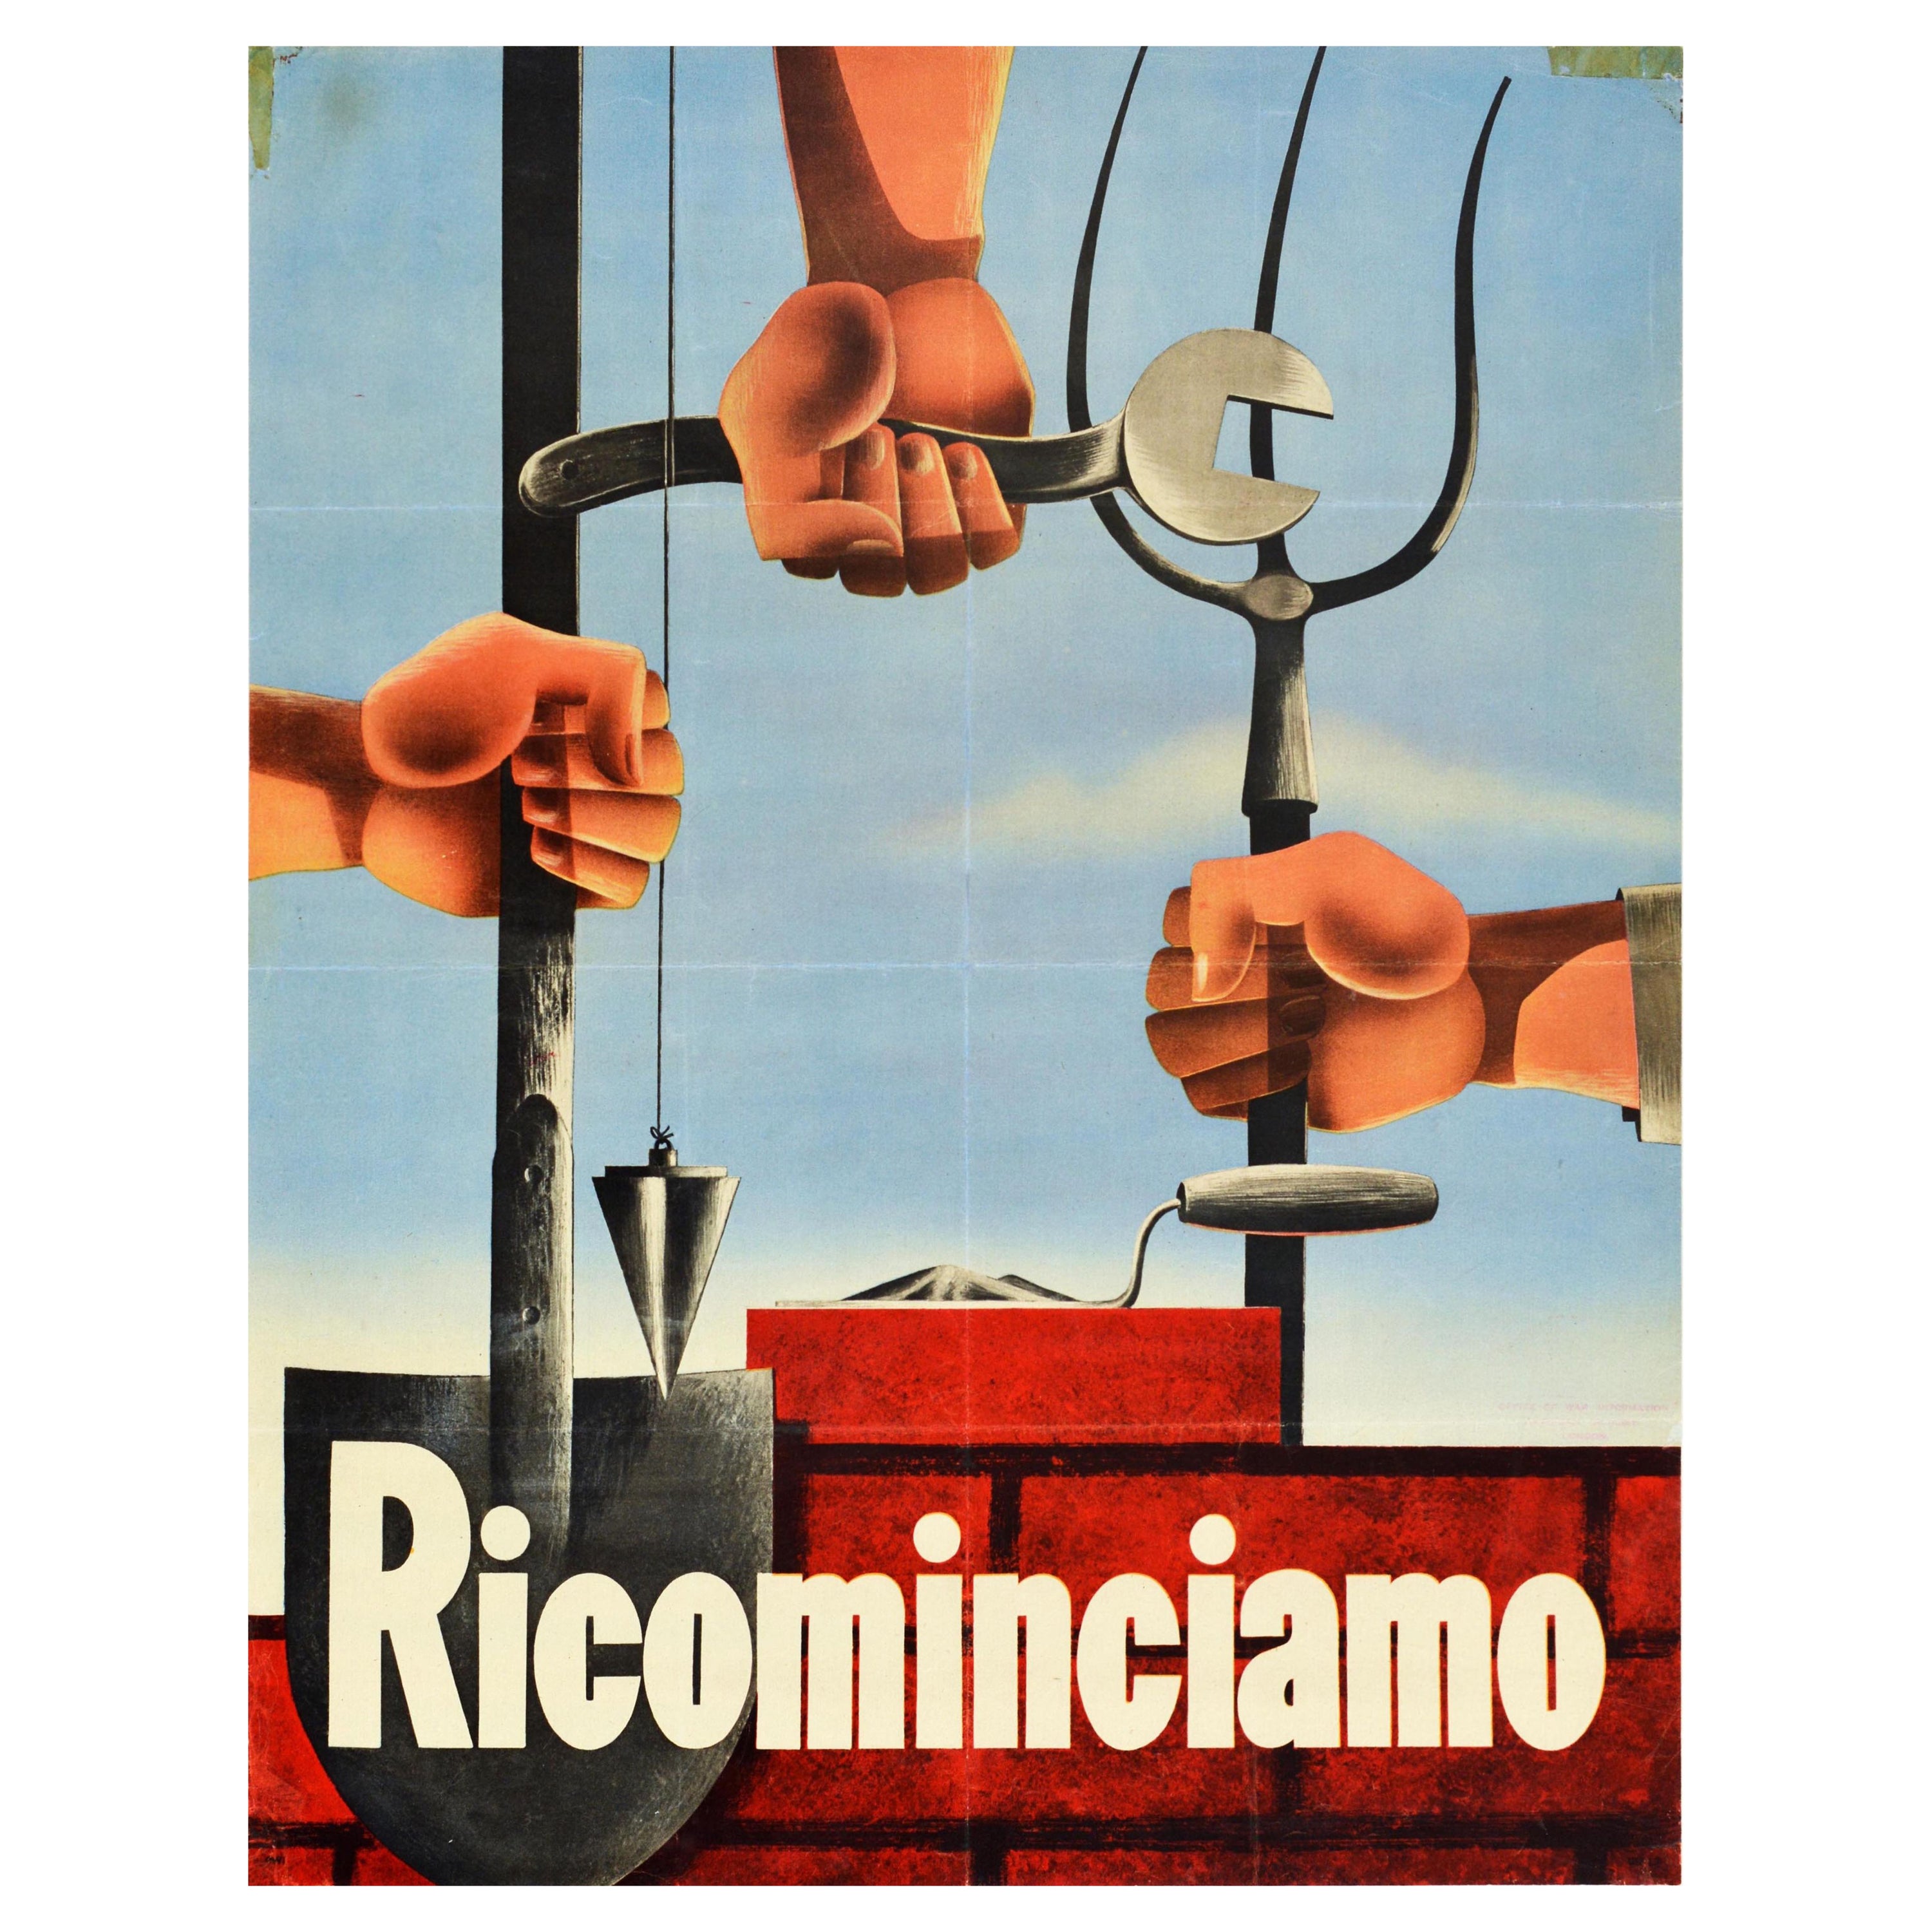 Original Vintage WWII Poster Ricominciamo Rebuild Italy Labour Mechanic Farmer